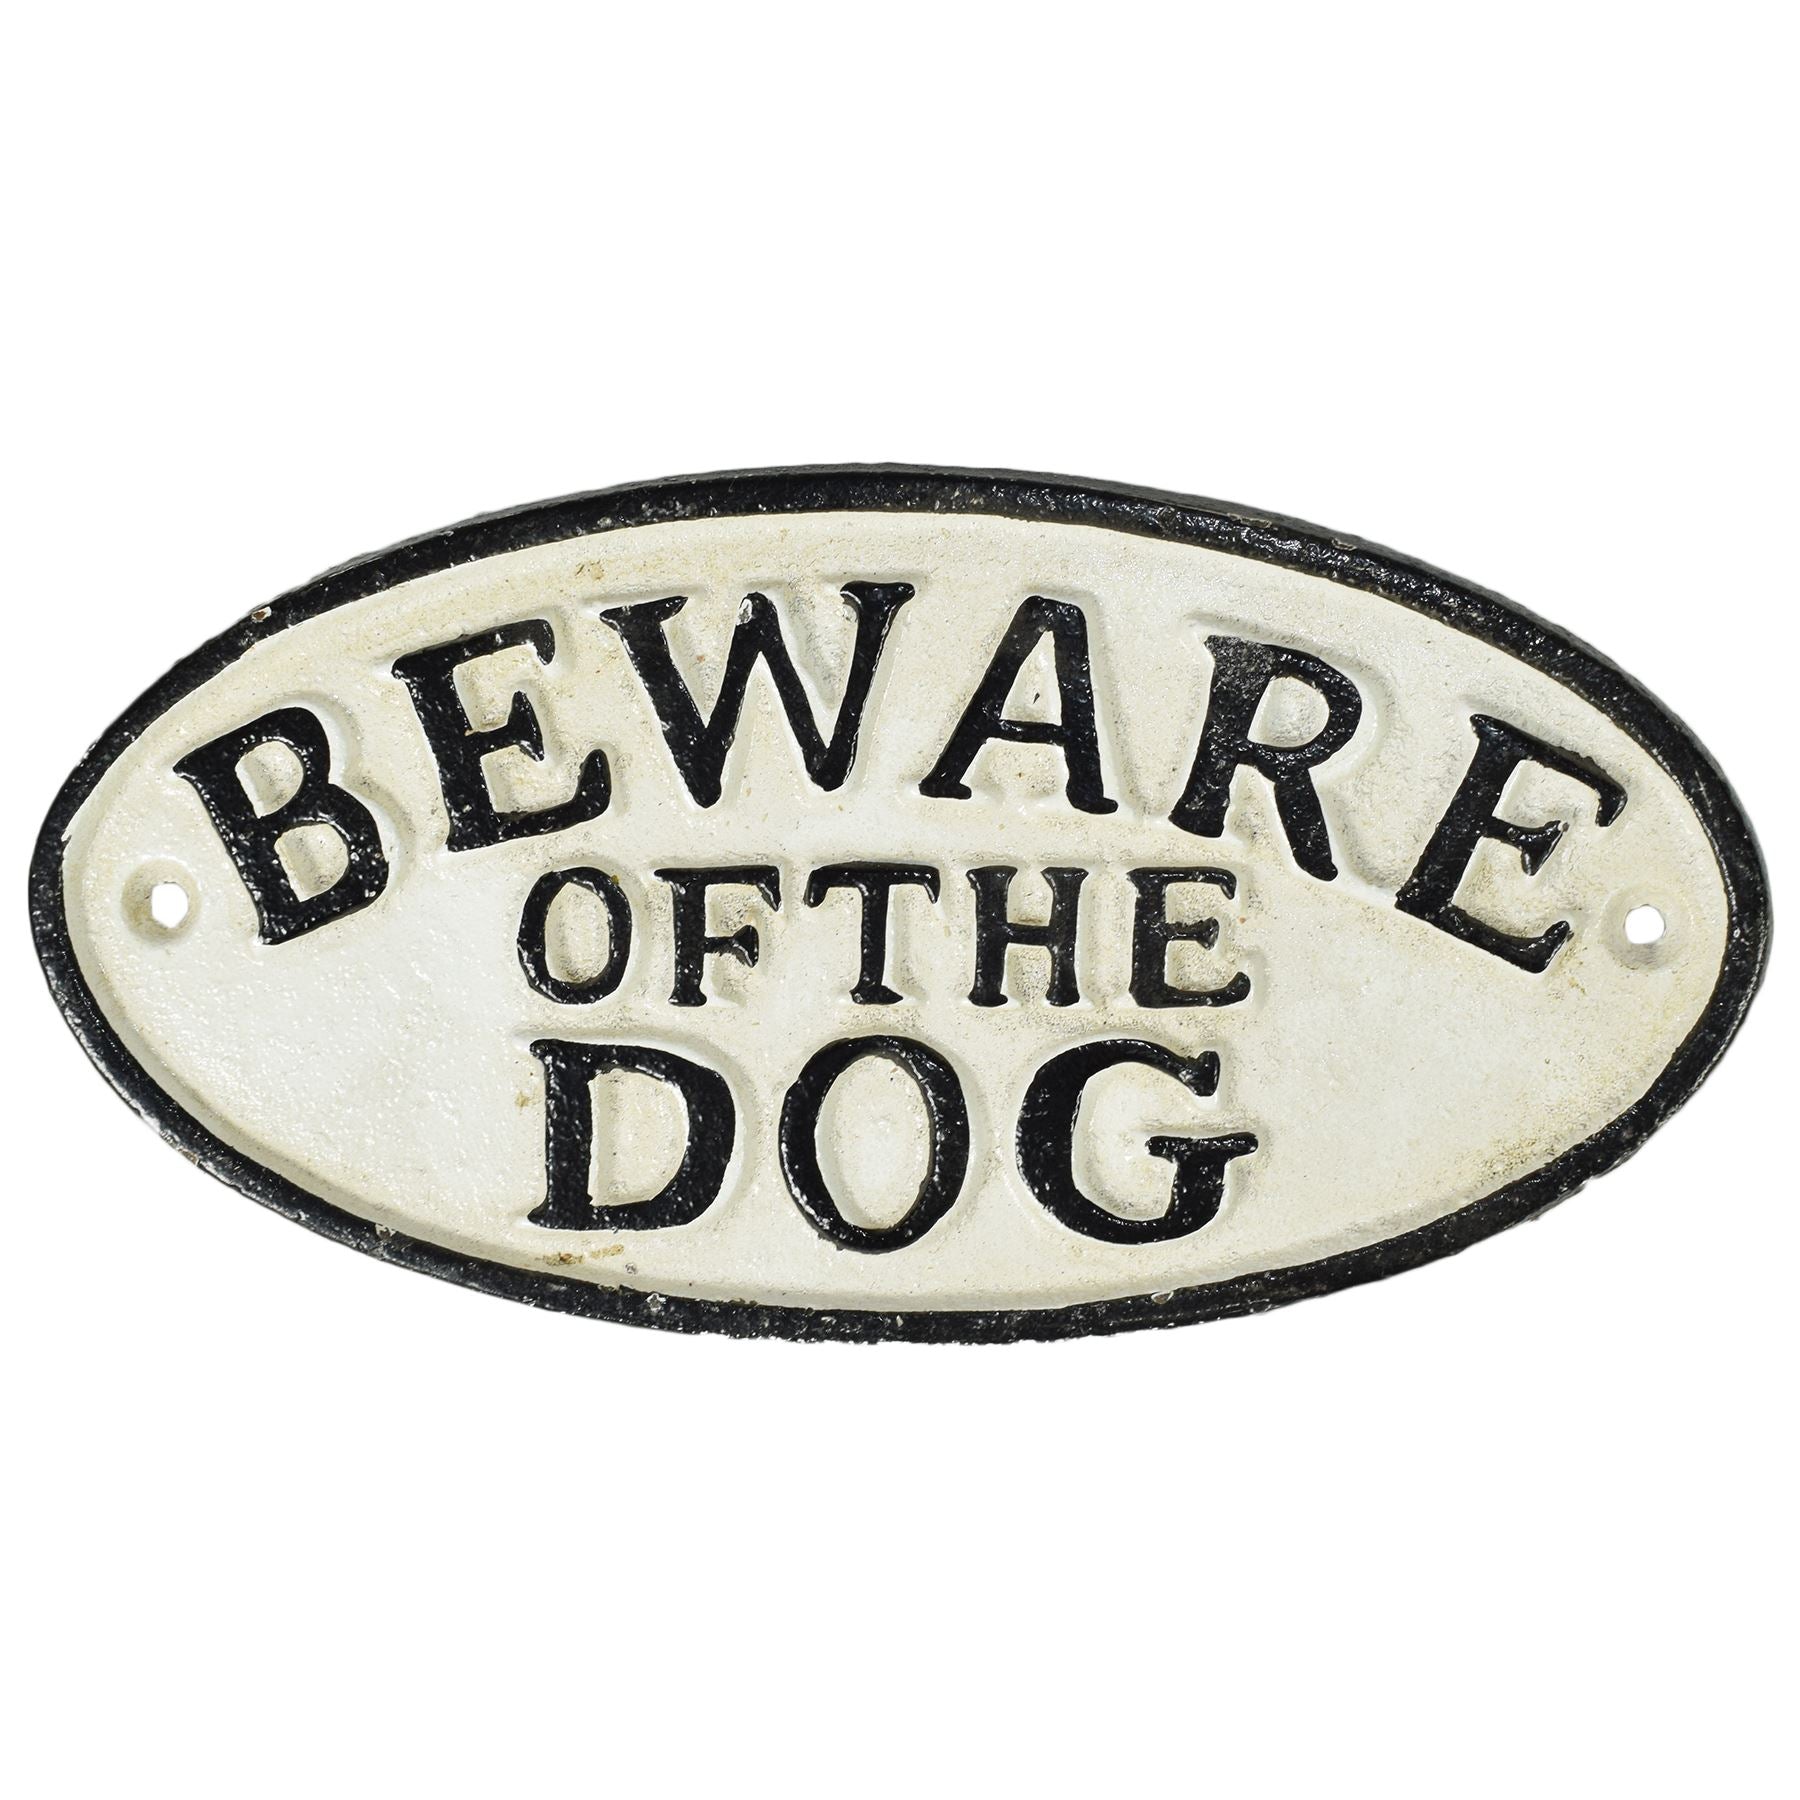 "Beware of Dog" Cast Iron Sign Plaque Door Wall House Fence Gate Post Garden